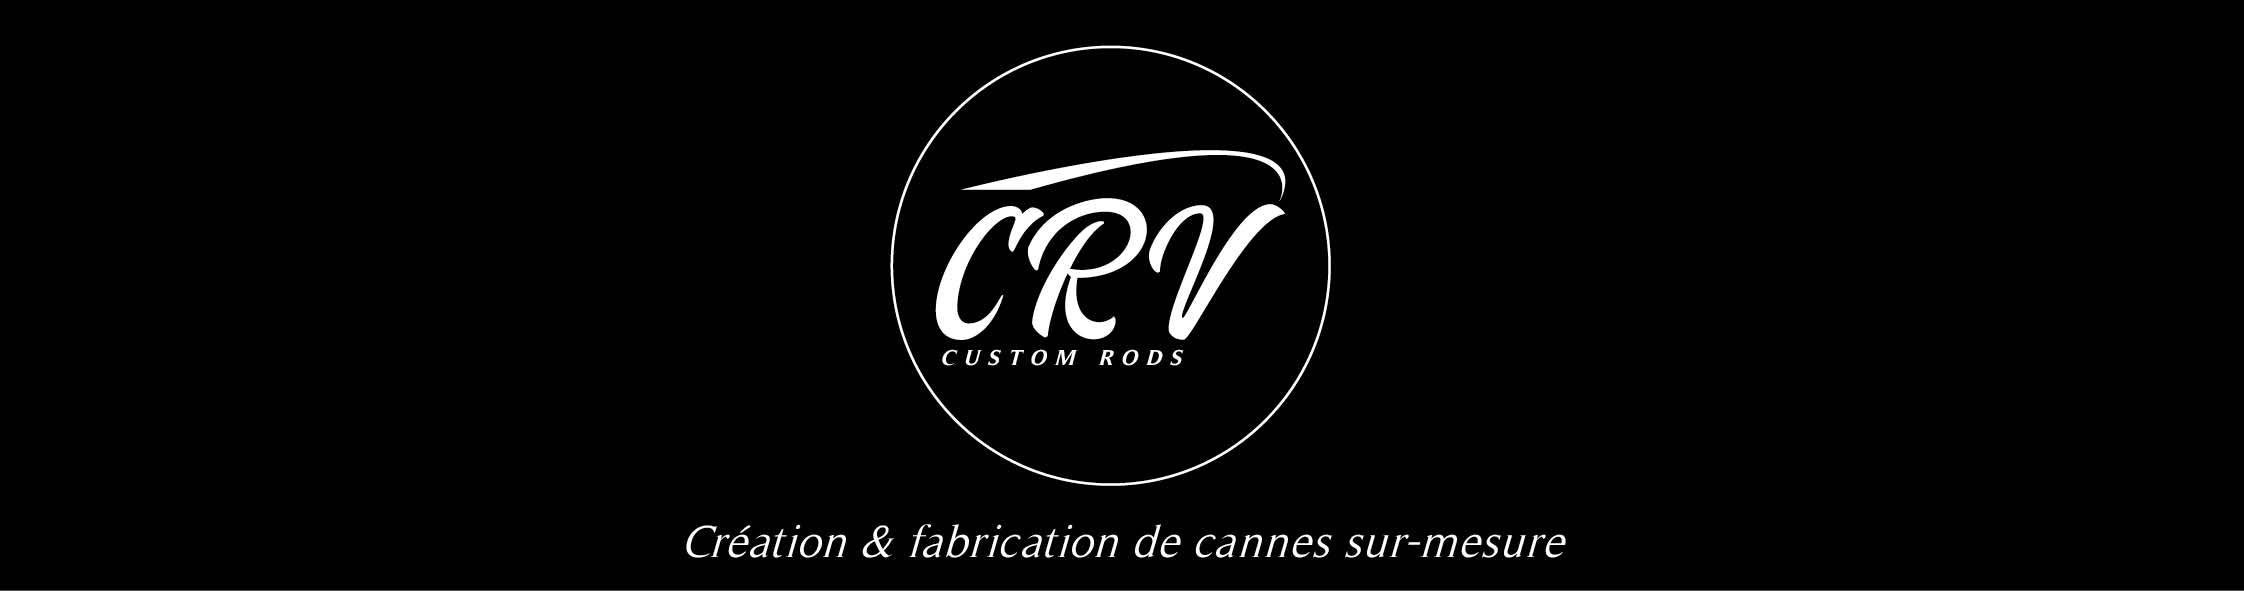 CRV Custom Rods